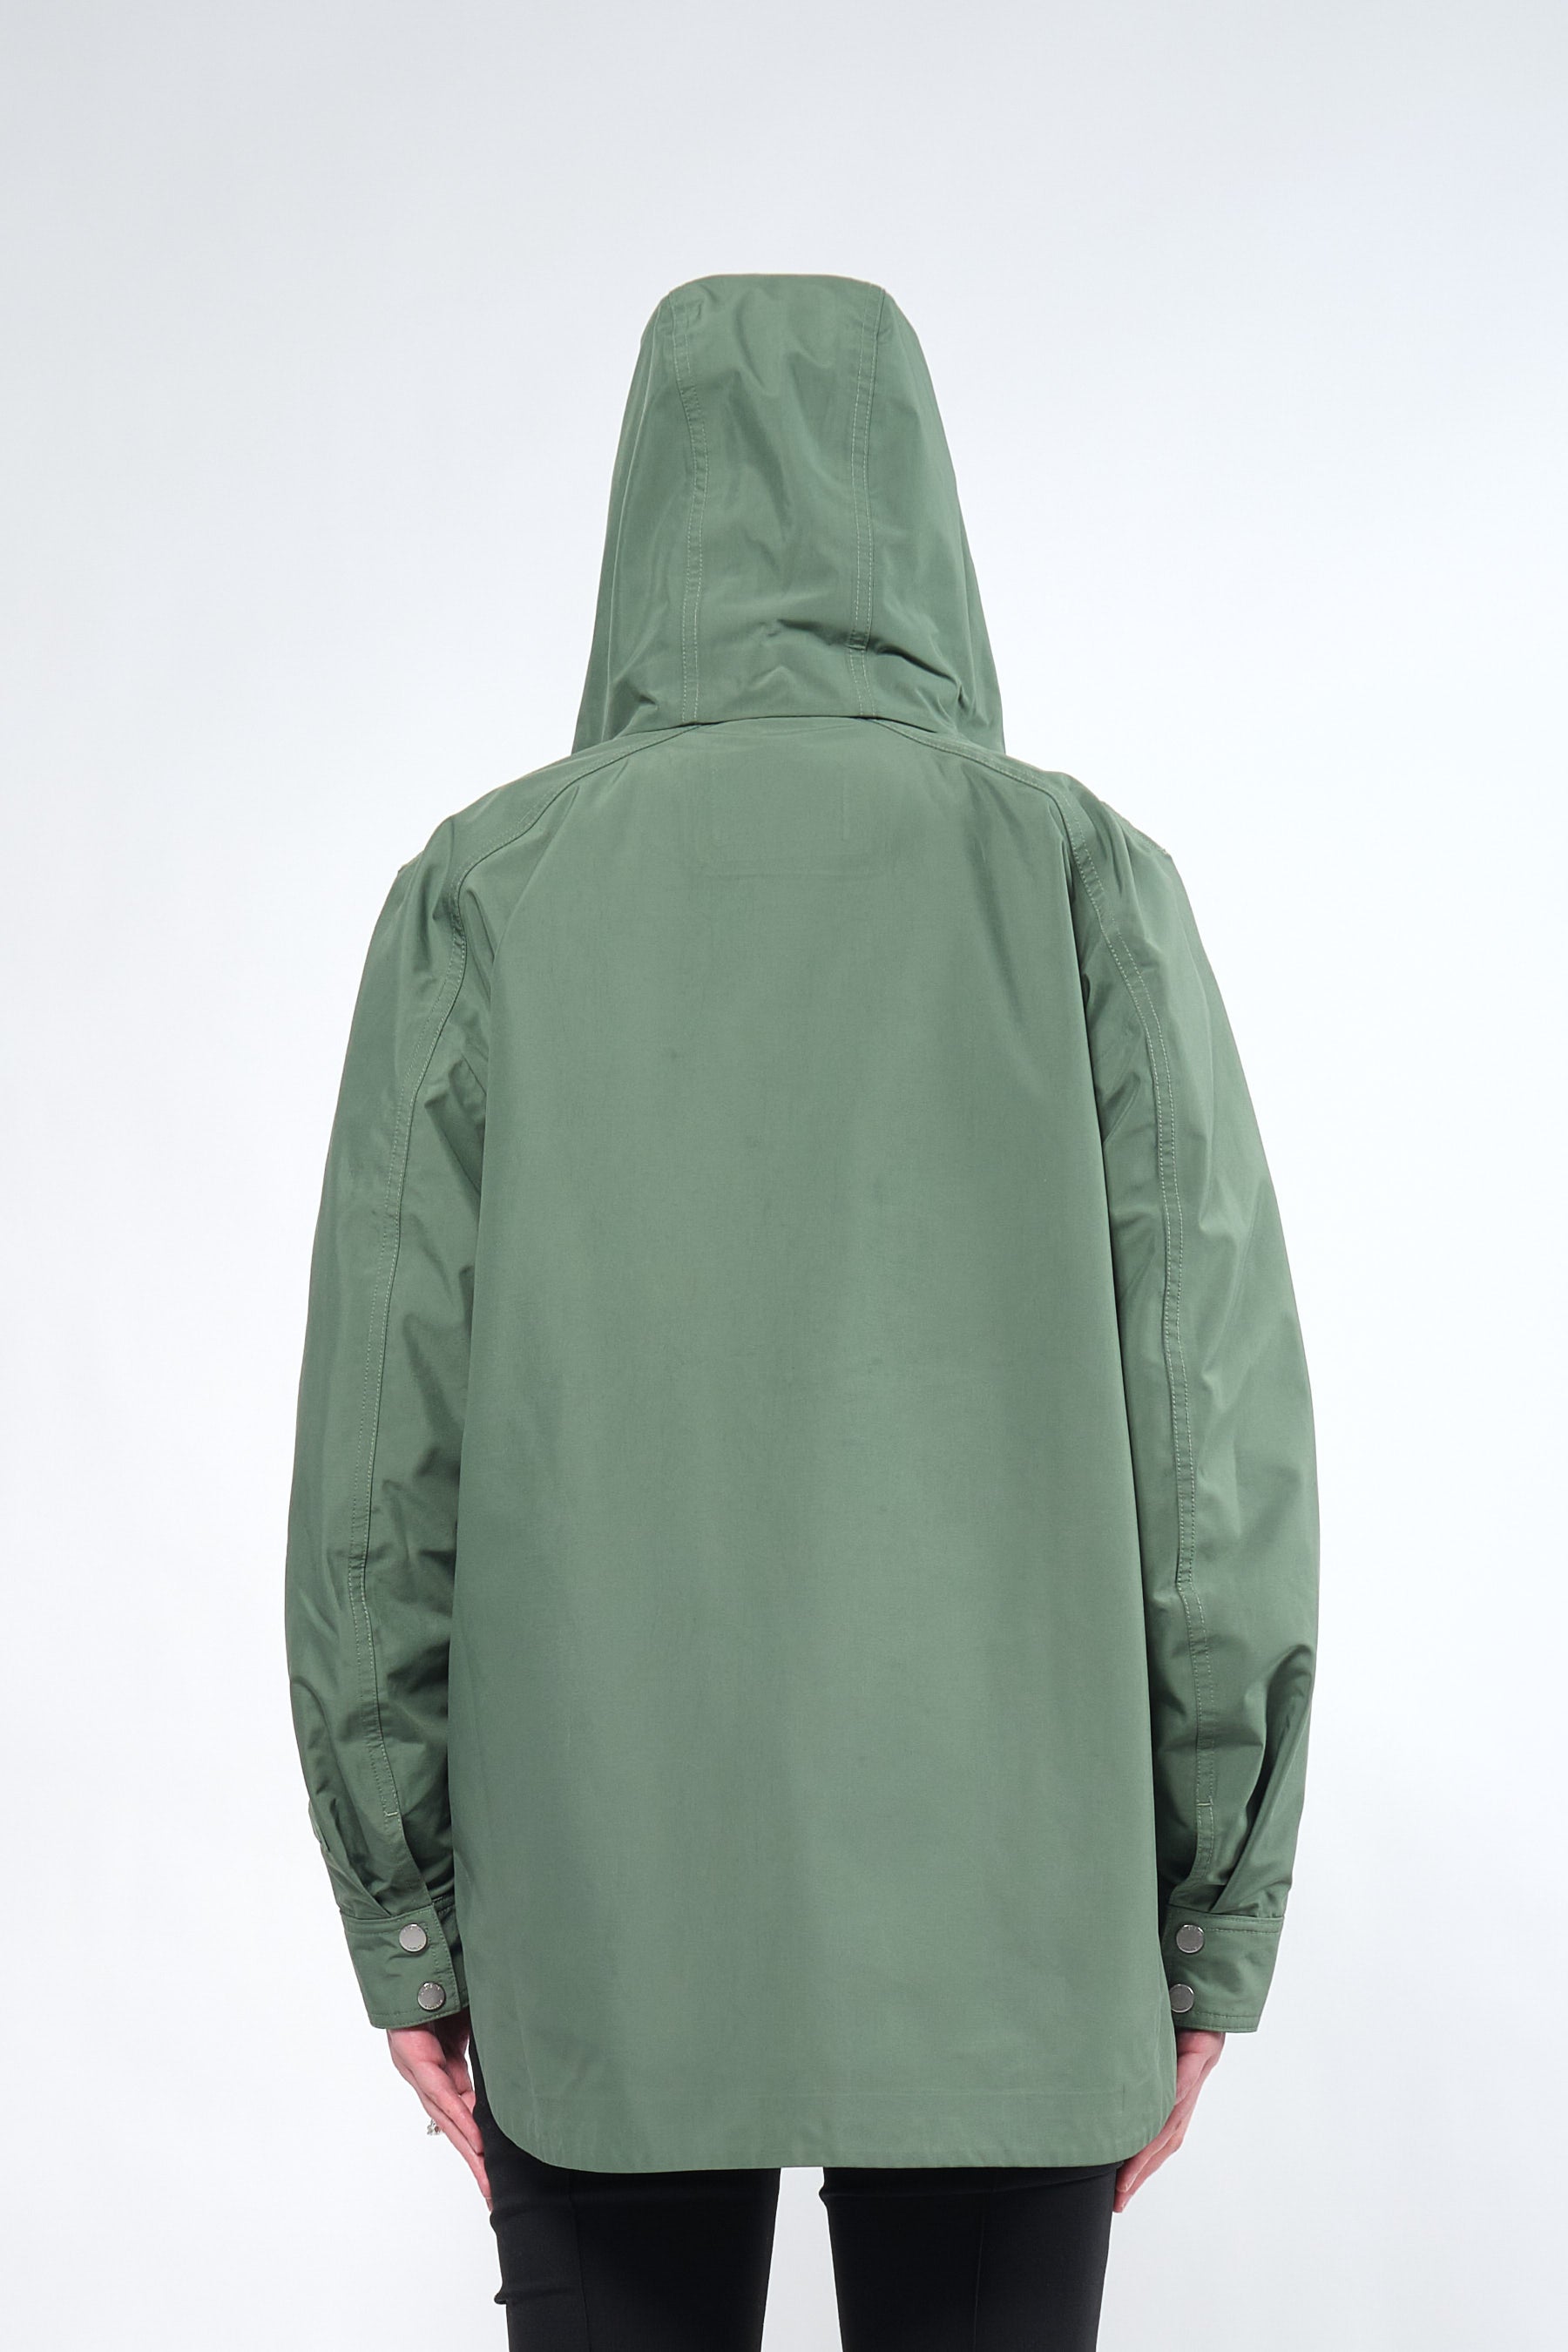  3L Green Waterproof Rain Jacket with Hood - Adhere To  - 8